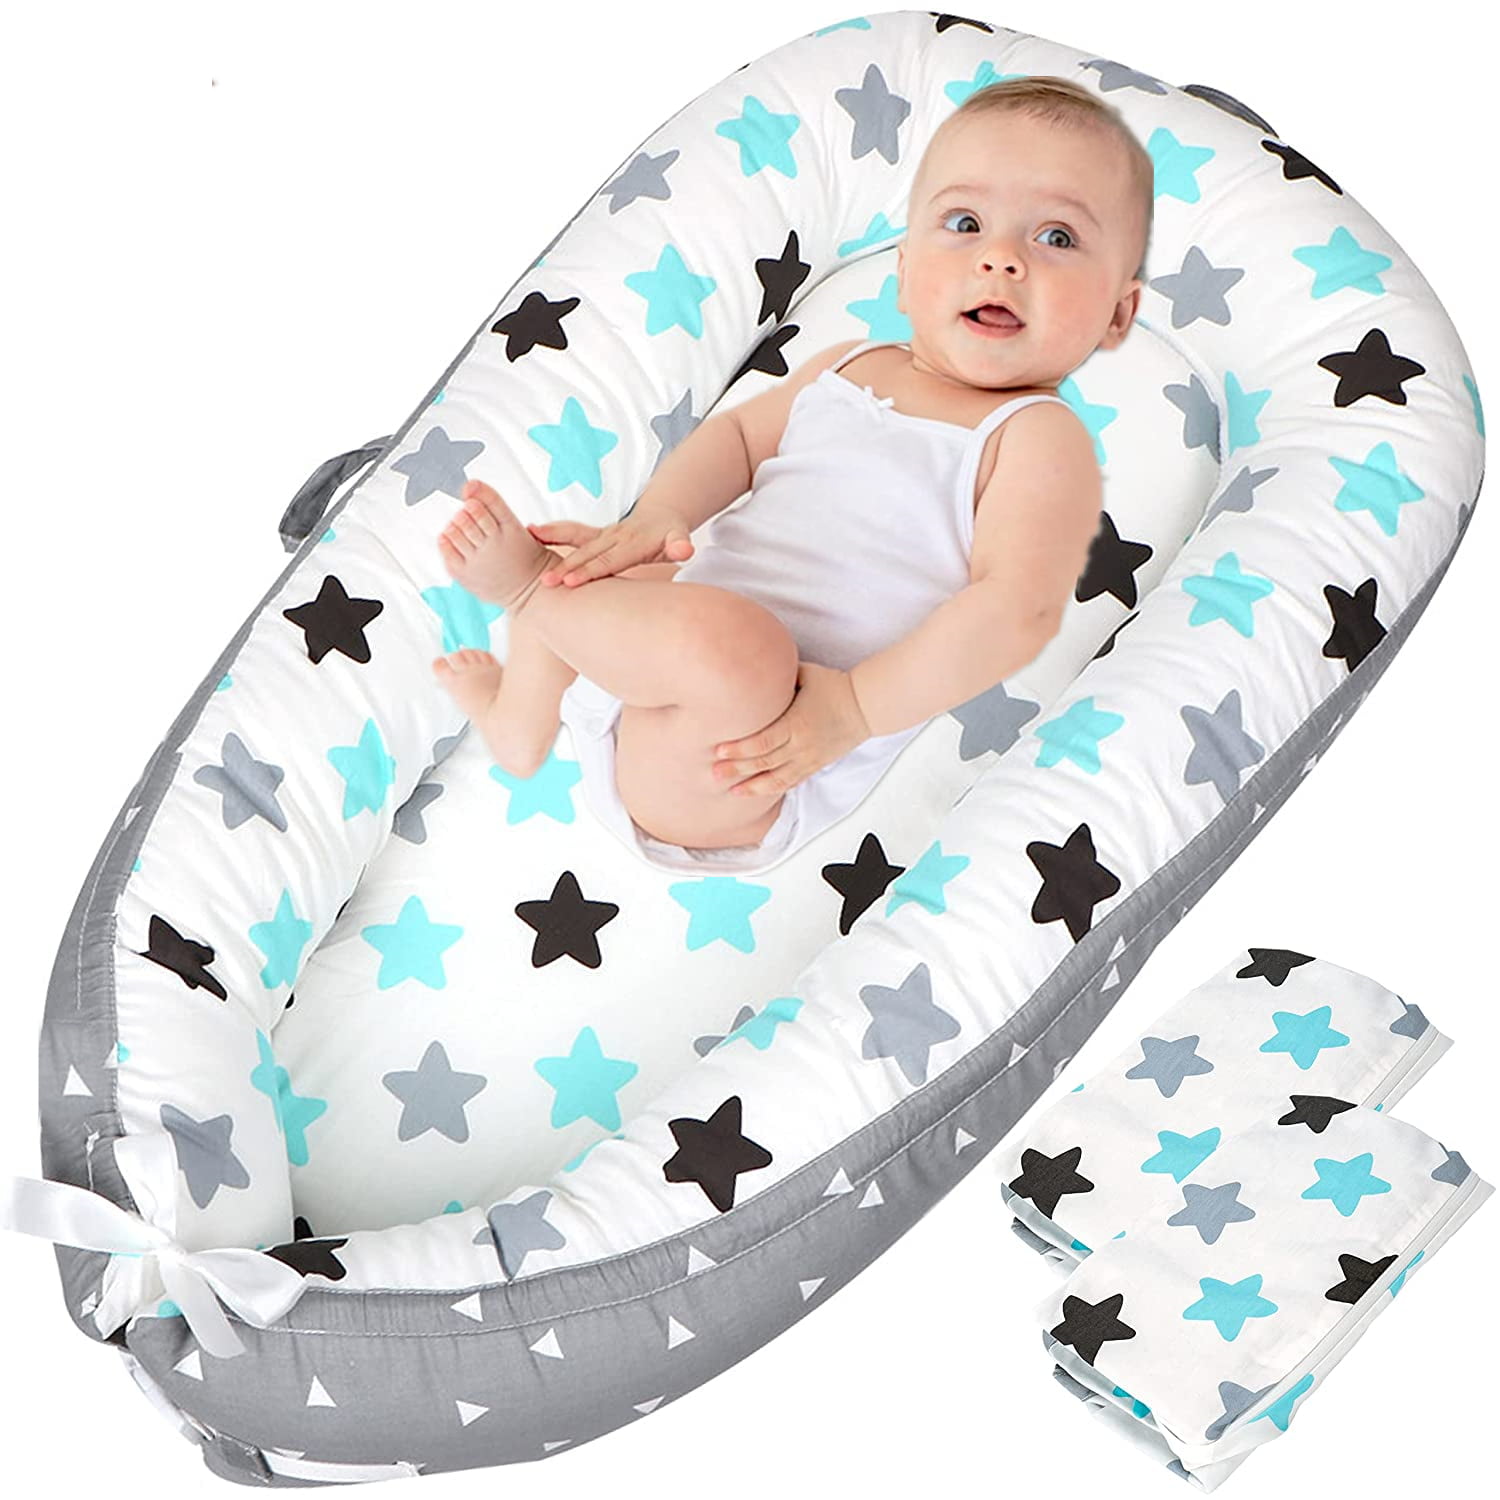 Essentials for Newborn Blue Abreeze Baby Lounger Baby Nest Sleeper Co-Sleeping for Baby Ultra Soft Portable Adjustable Newborn Lounger Crib Bassinet Mattress 